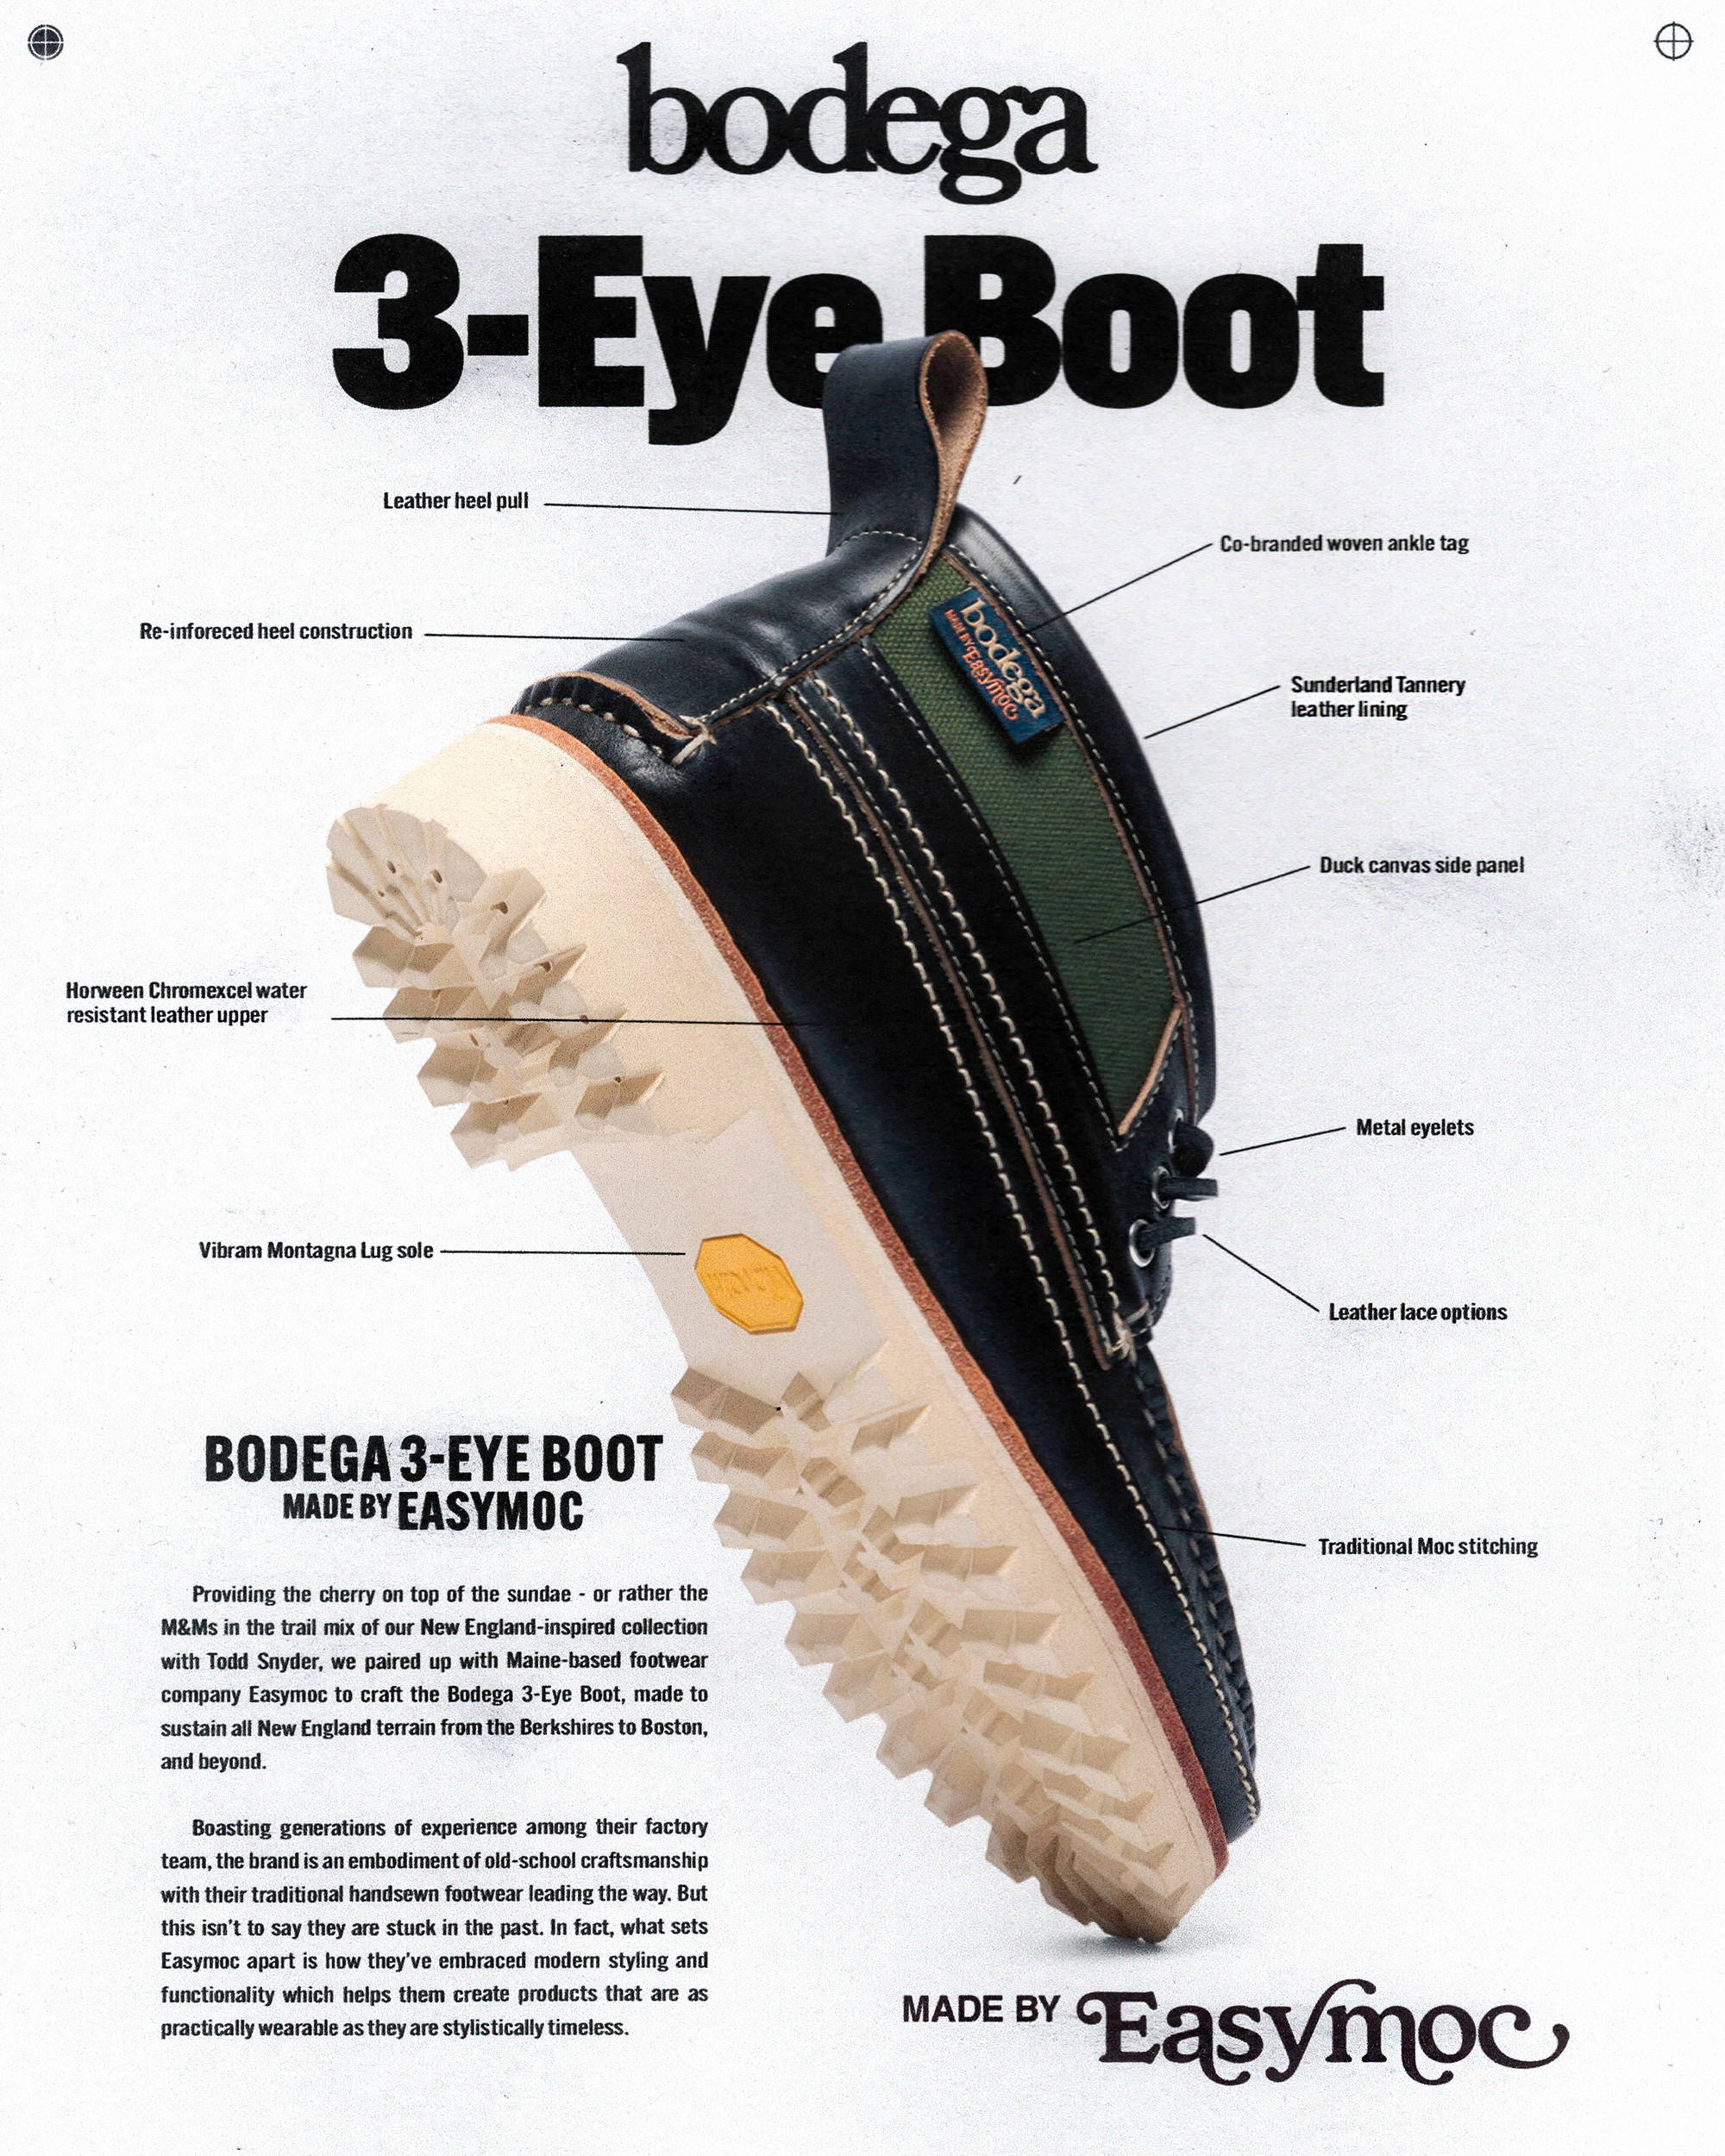 Behind The Design: Bodega x Easymoc 3-Eye Chukka Boot